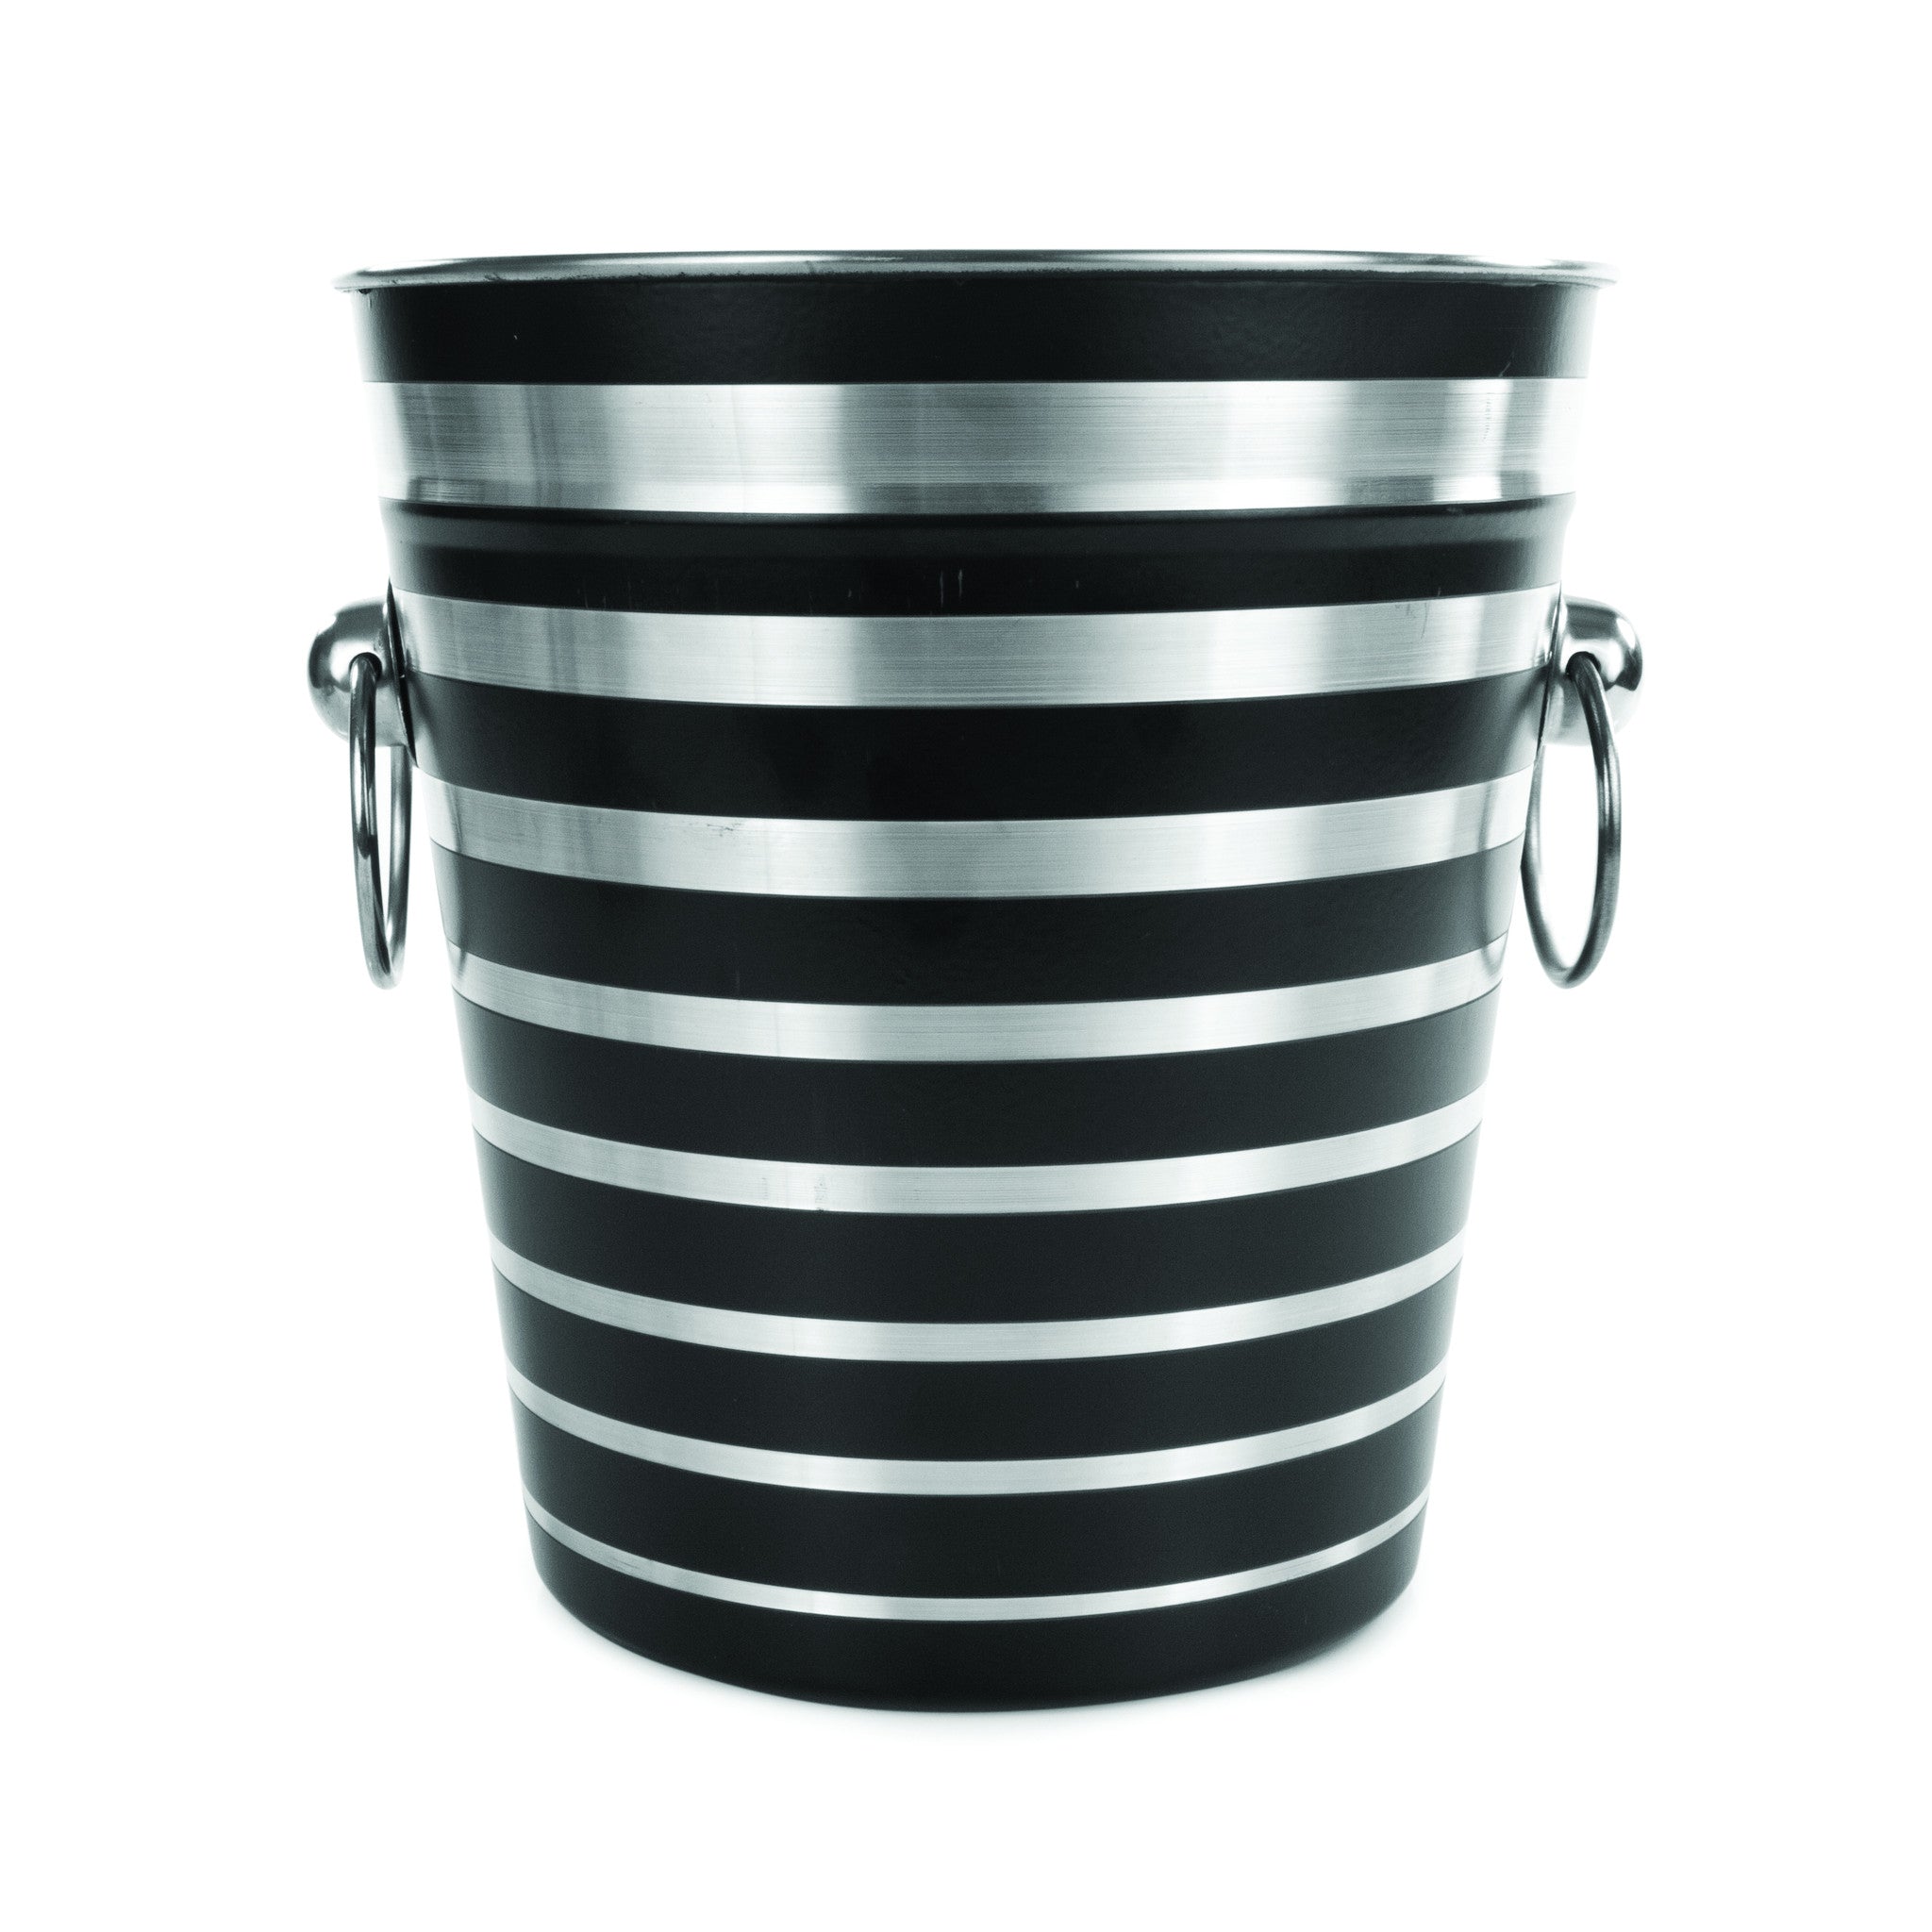 Striped Ice Bucket